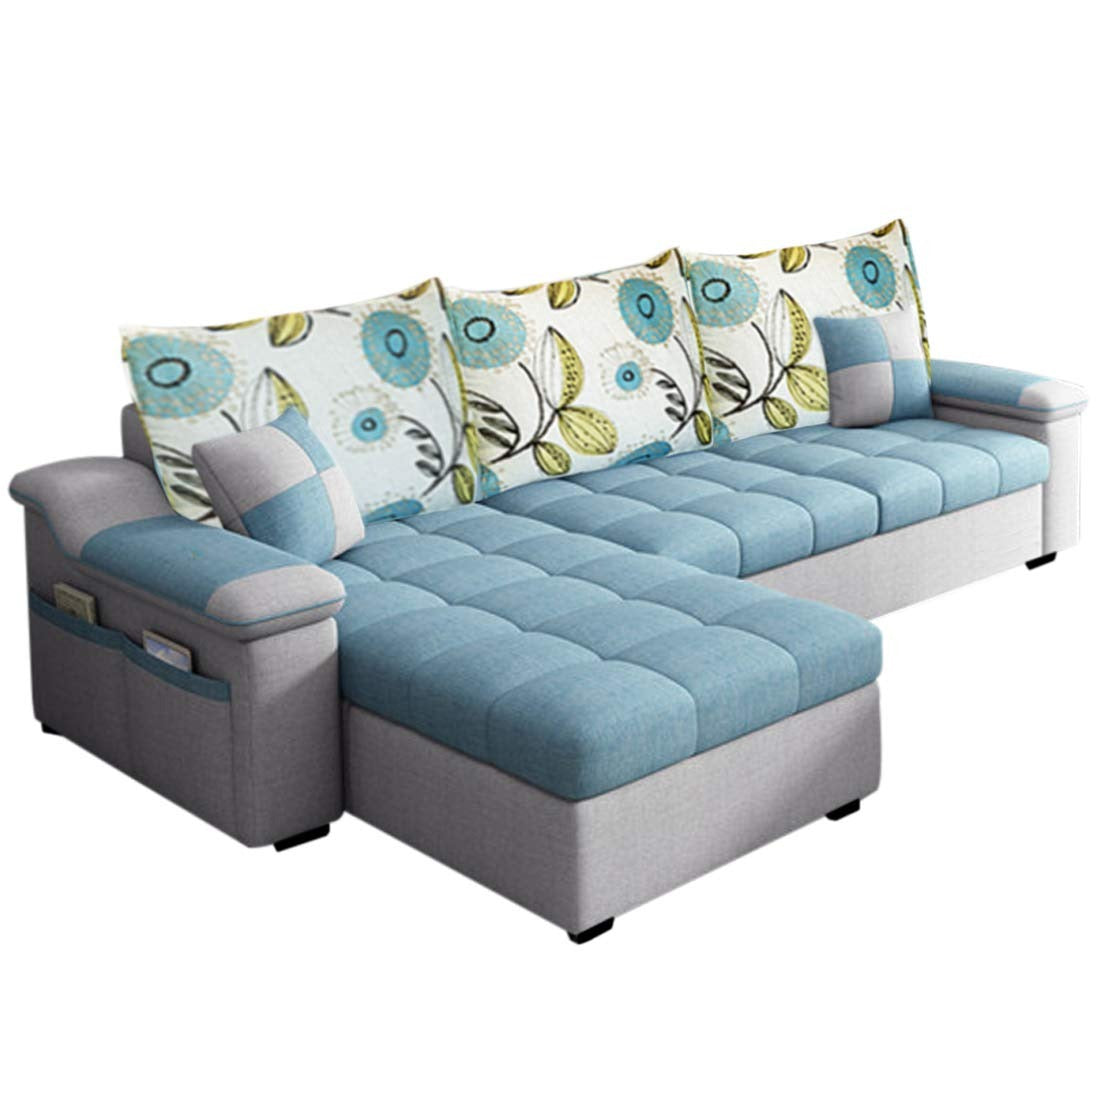 Designer Sofa Set:- Modern Art Antique 4 seaters Sectional Sofa (Sky Blue & White)